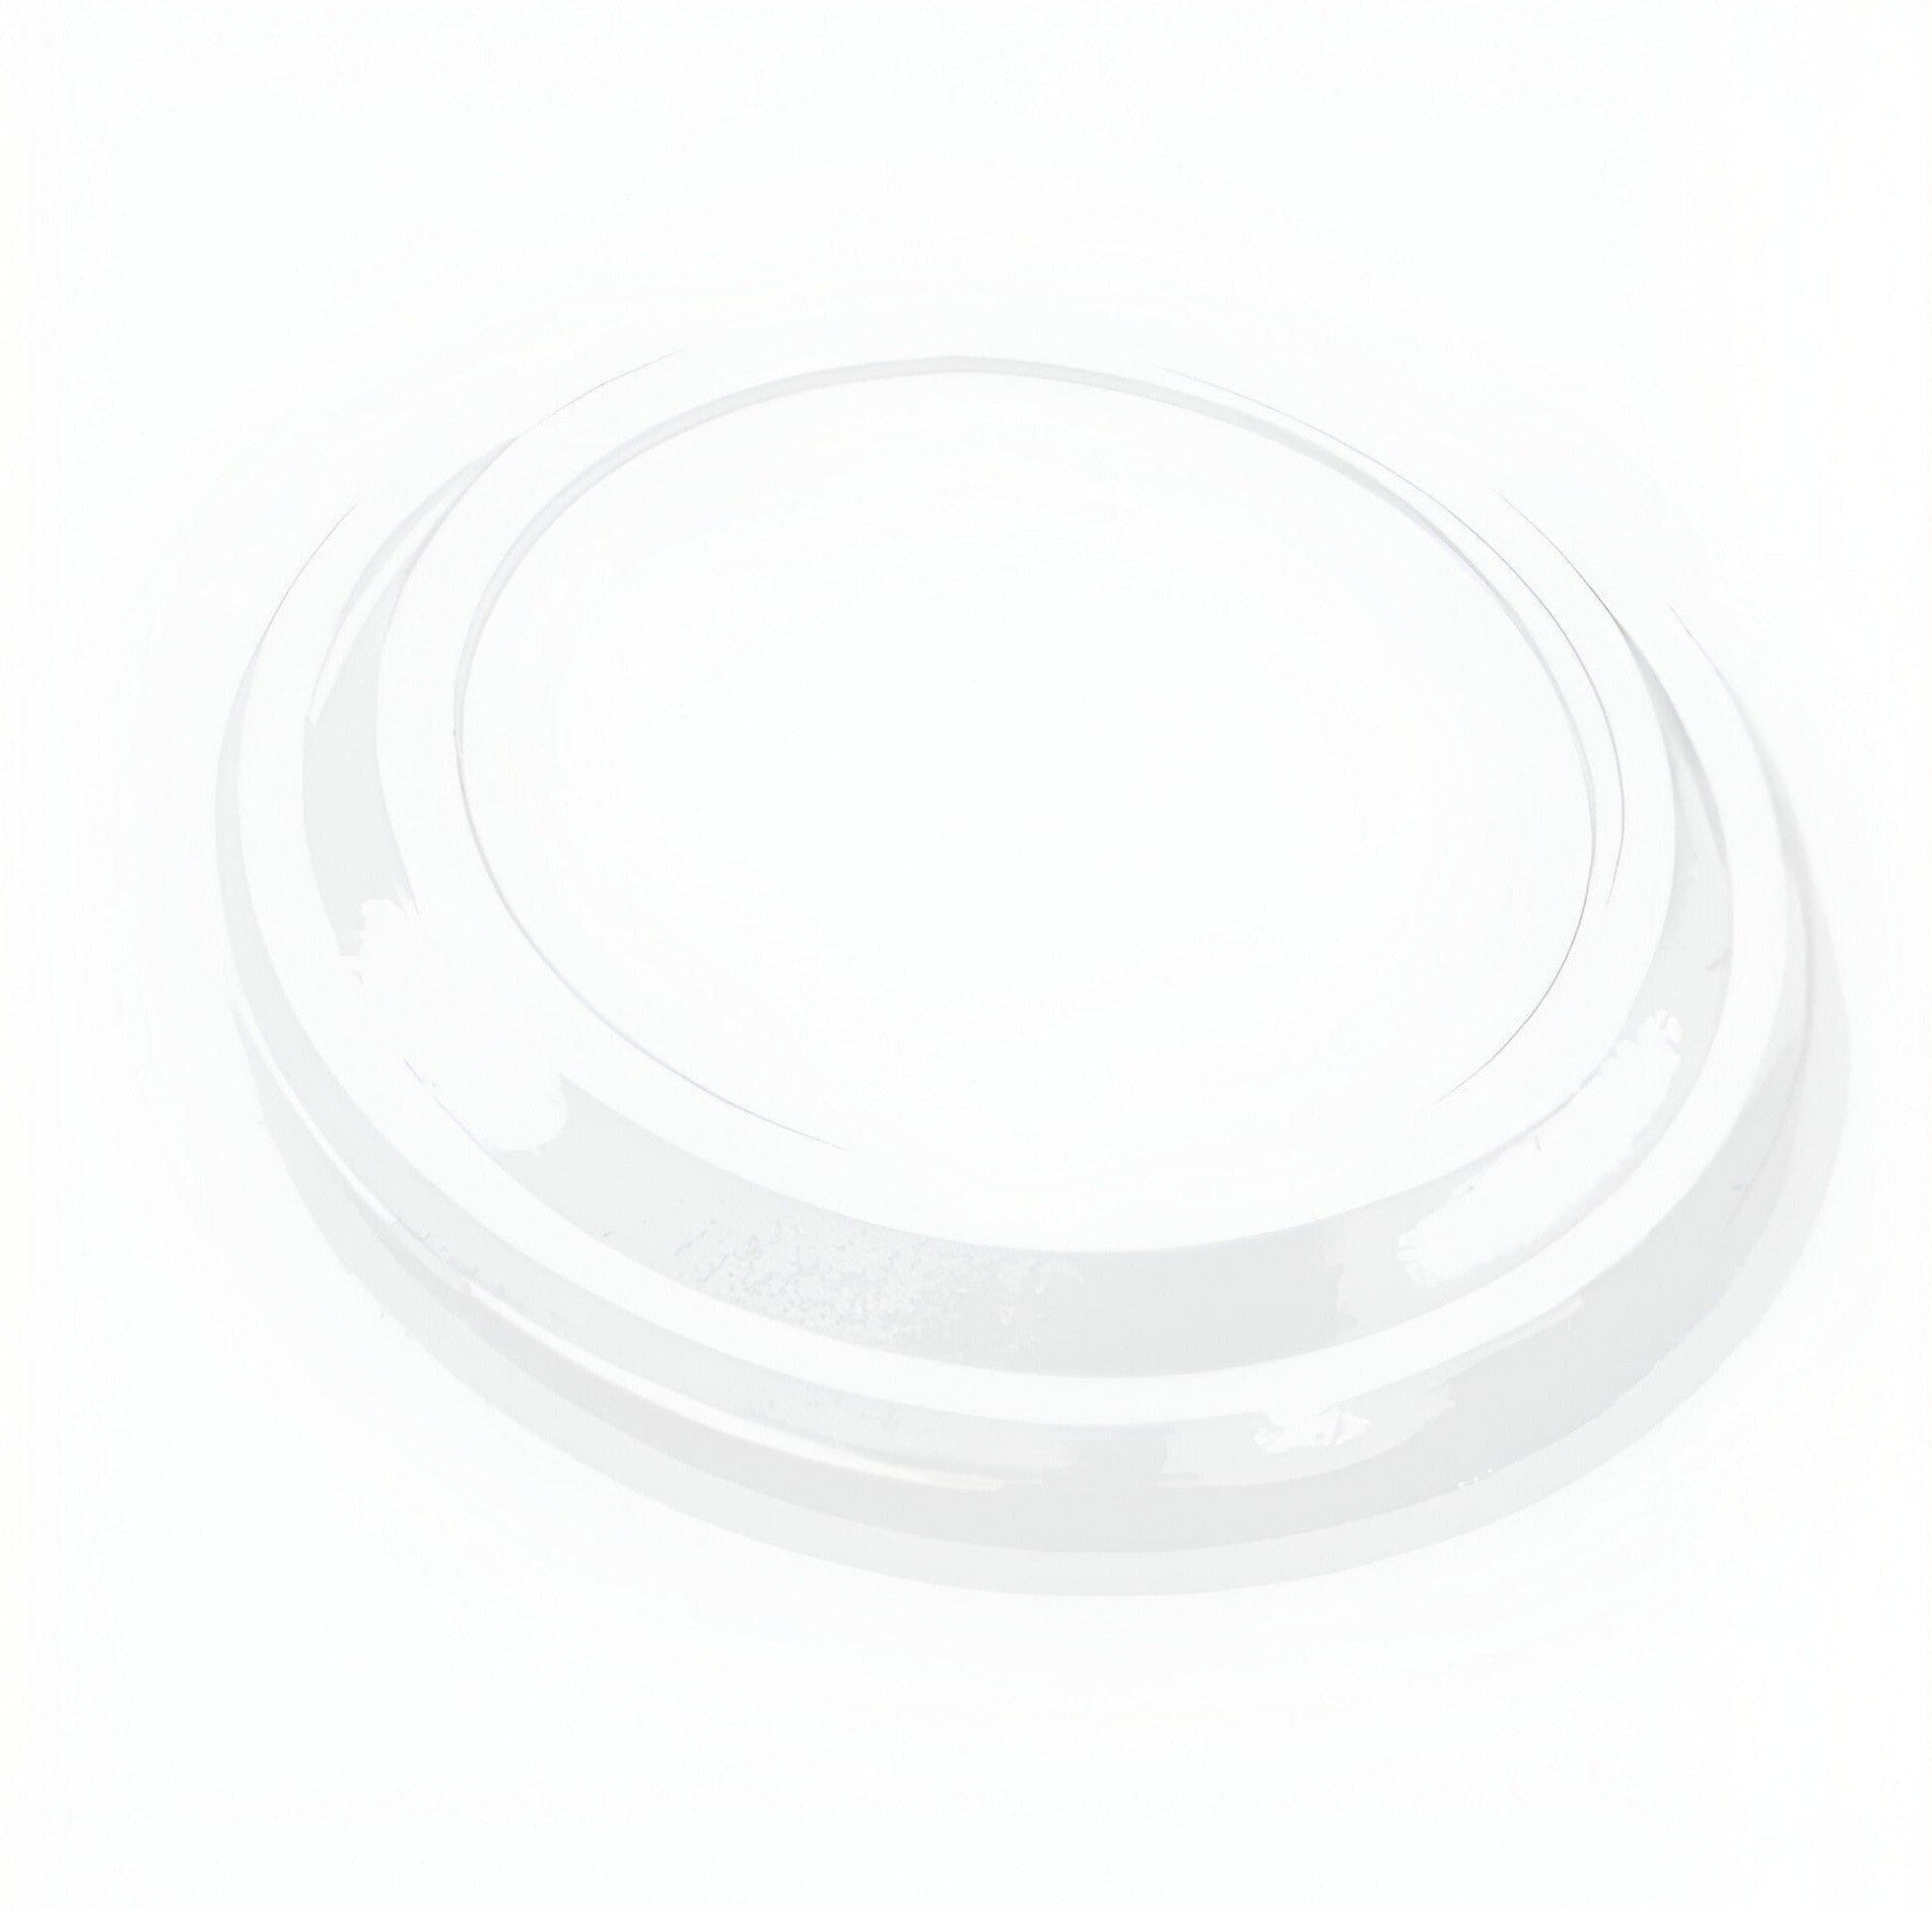 Darnel - Clear Lid Fits 16 Oz Plastic Bowls, 500/cs - D771600T